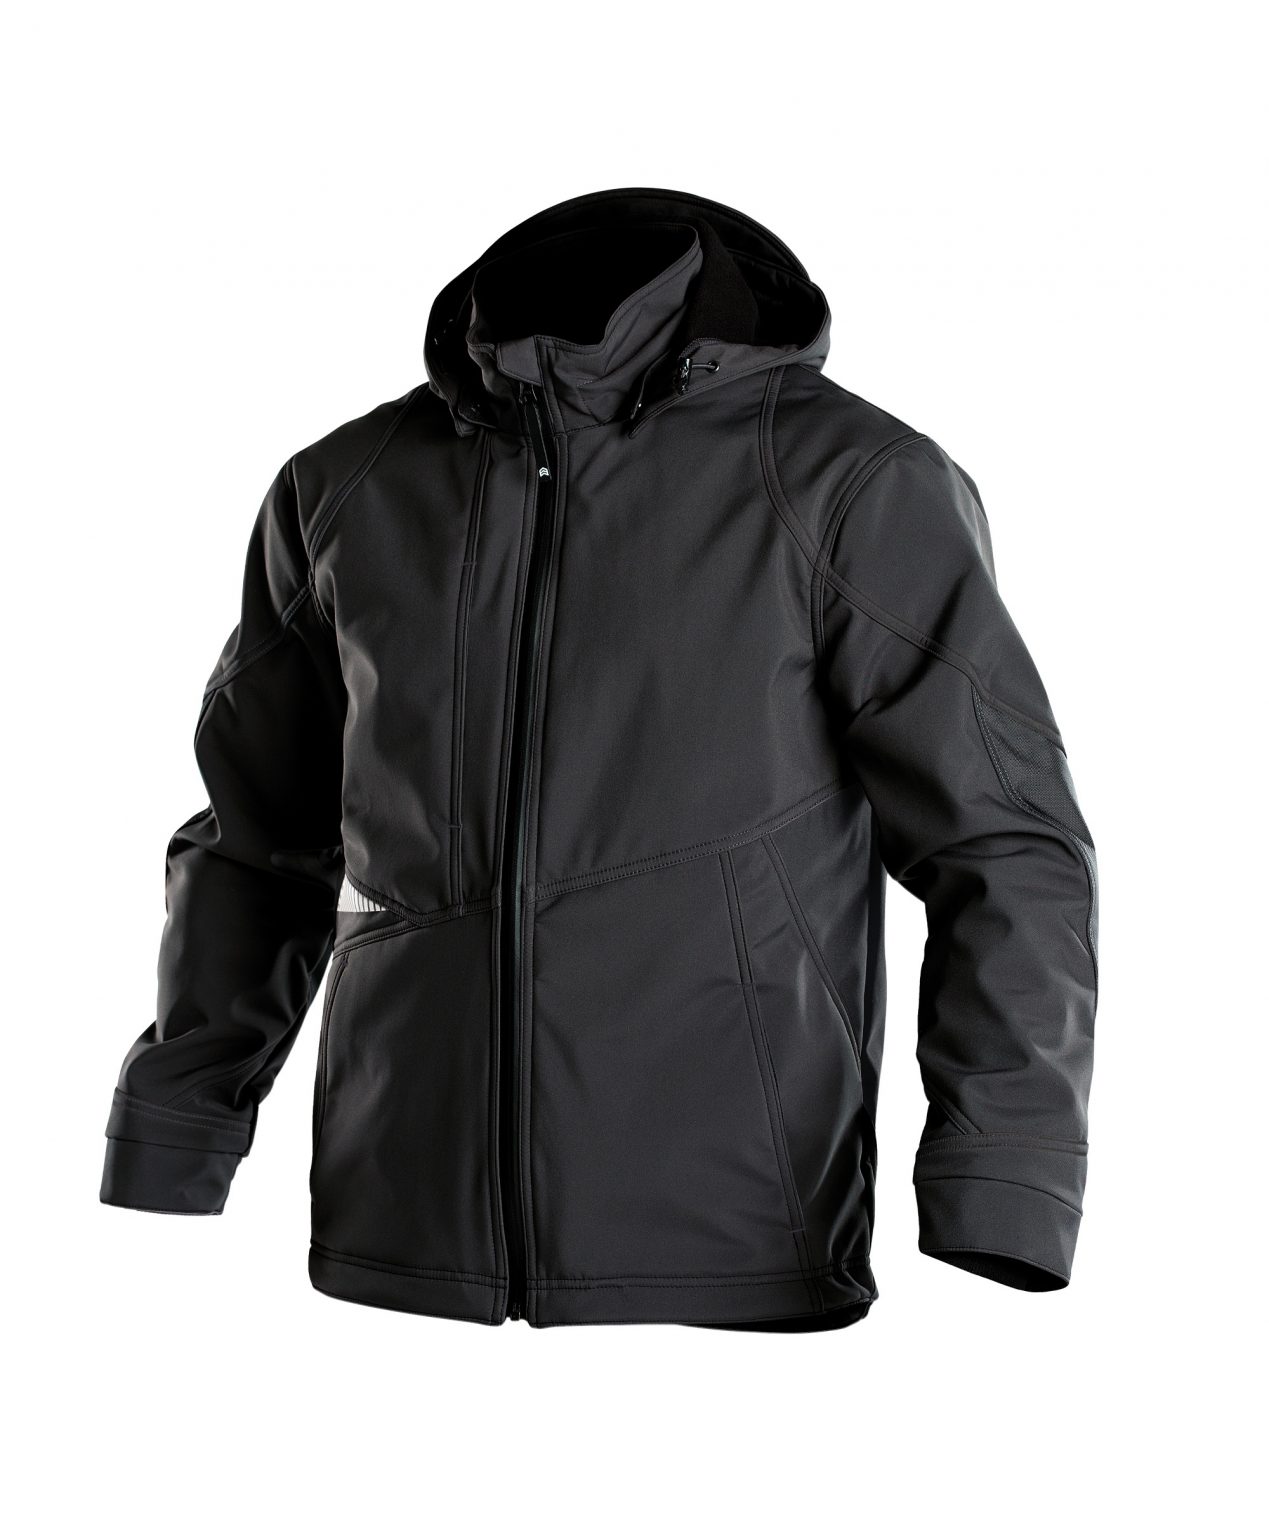 gravity softshell jacket black front